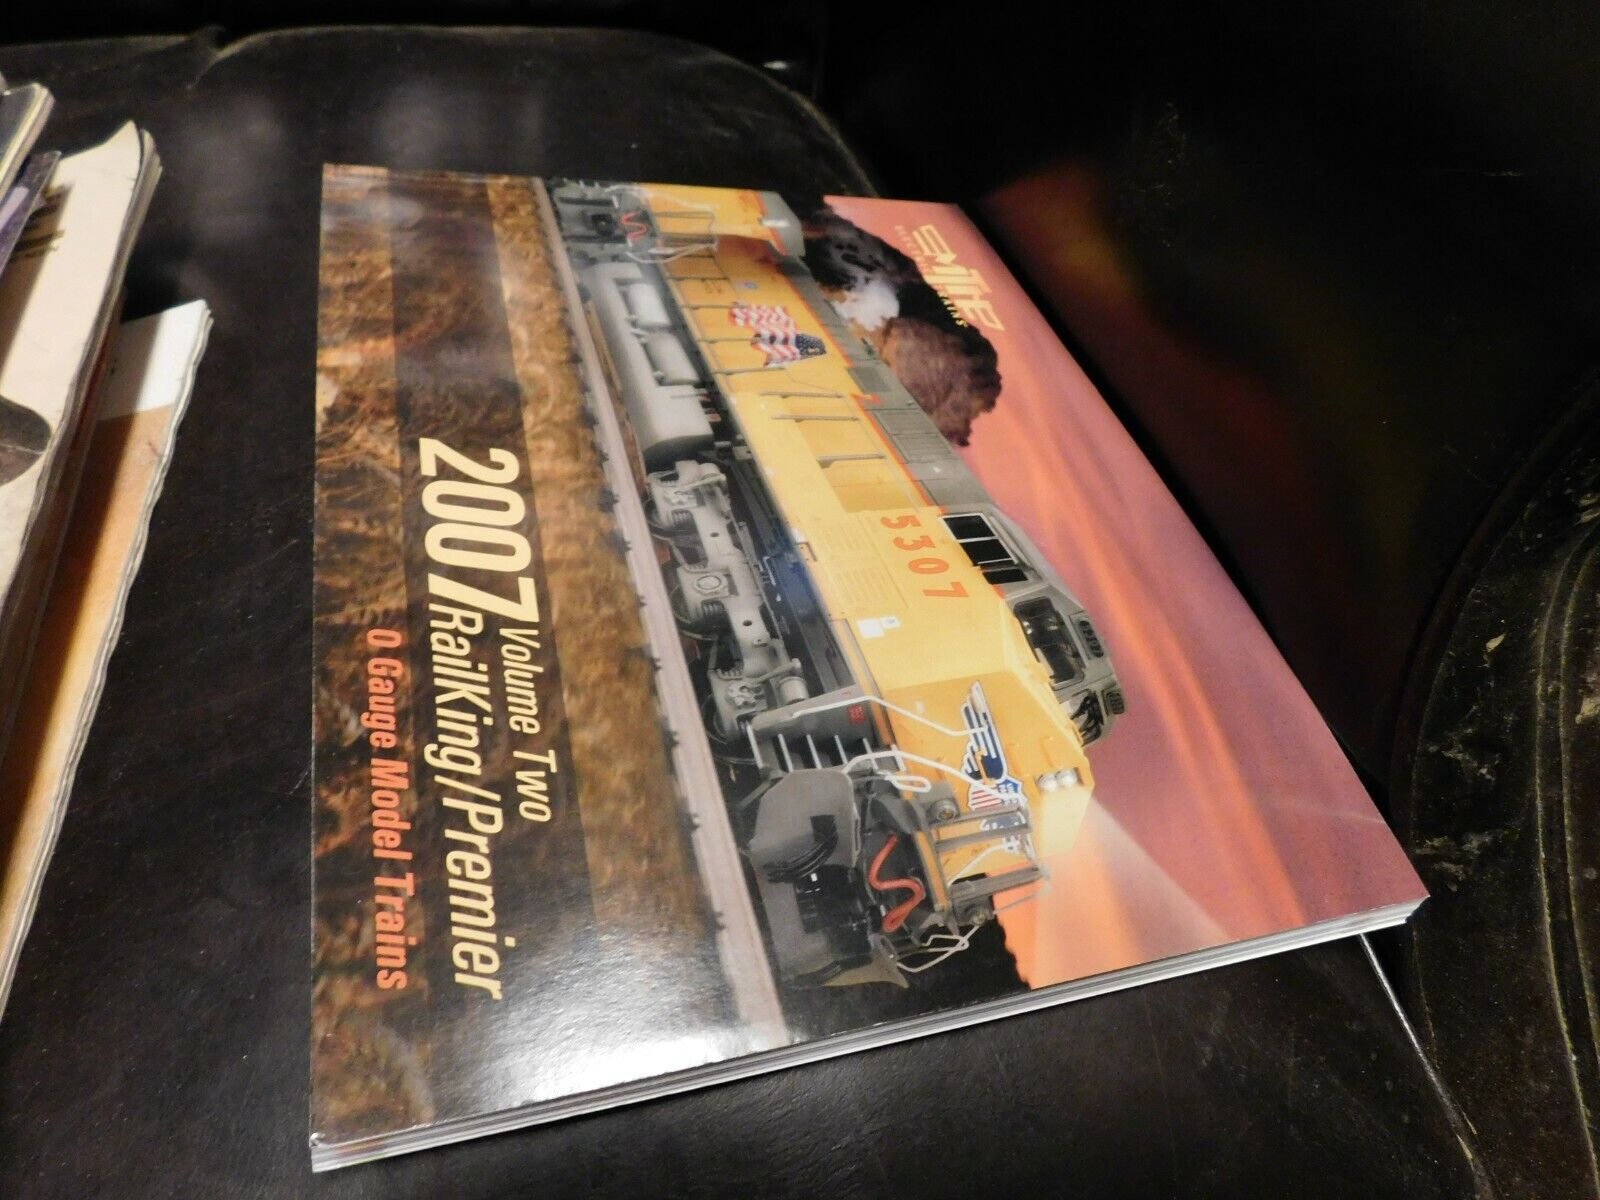 MTH Mike\'s Train House Catalog Magazine Book 2007 Rail King Volume 2